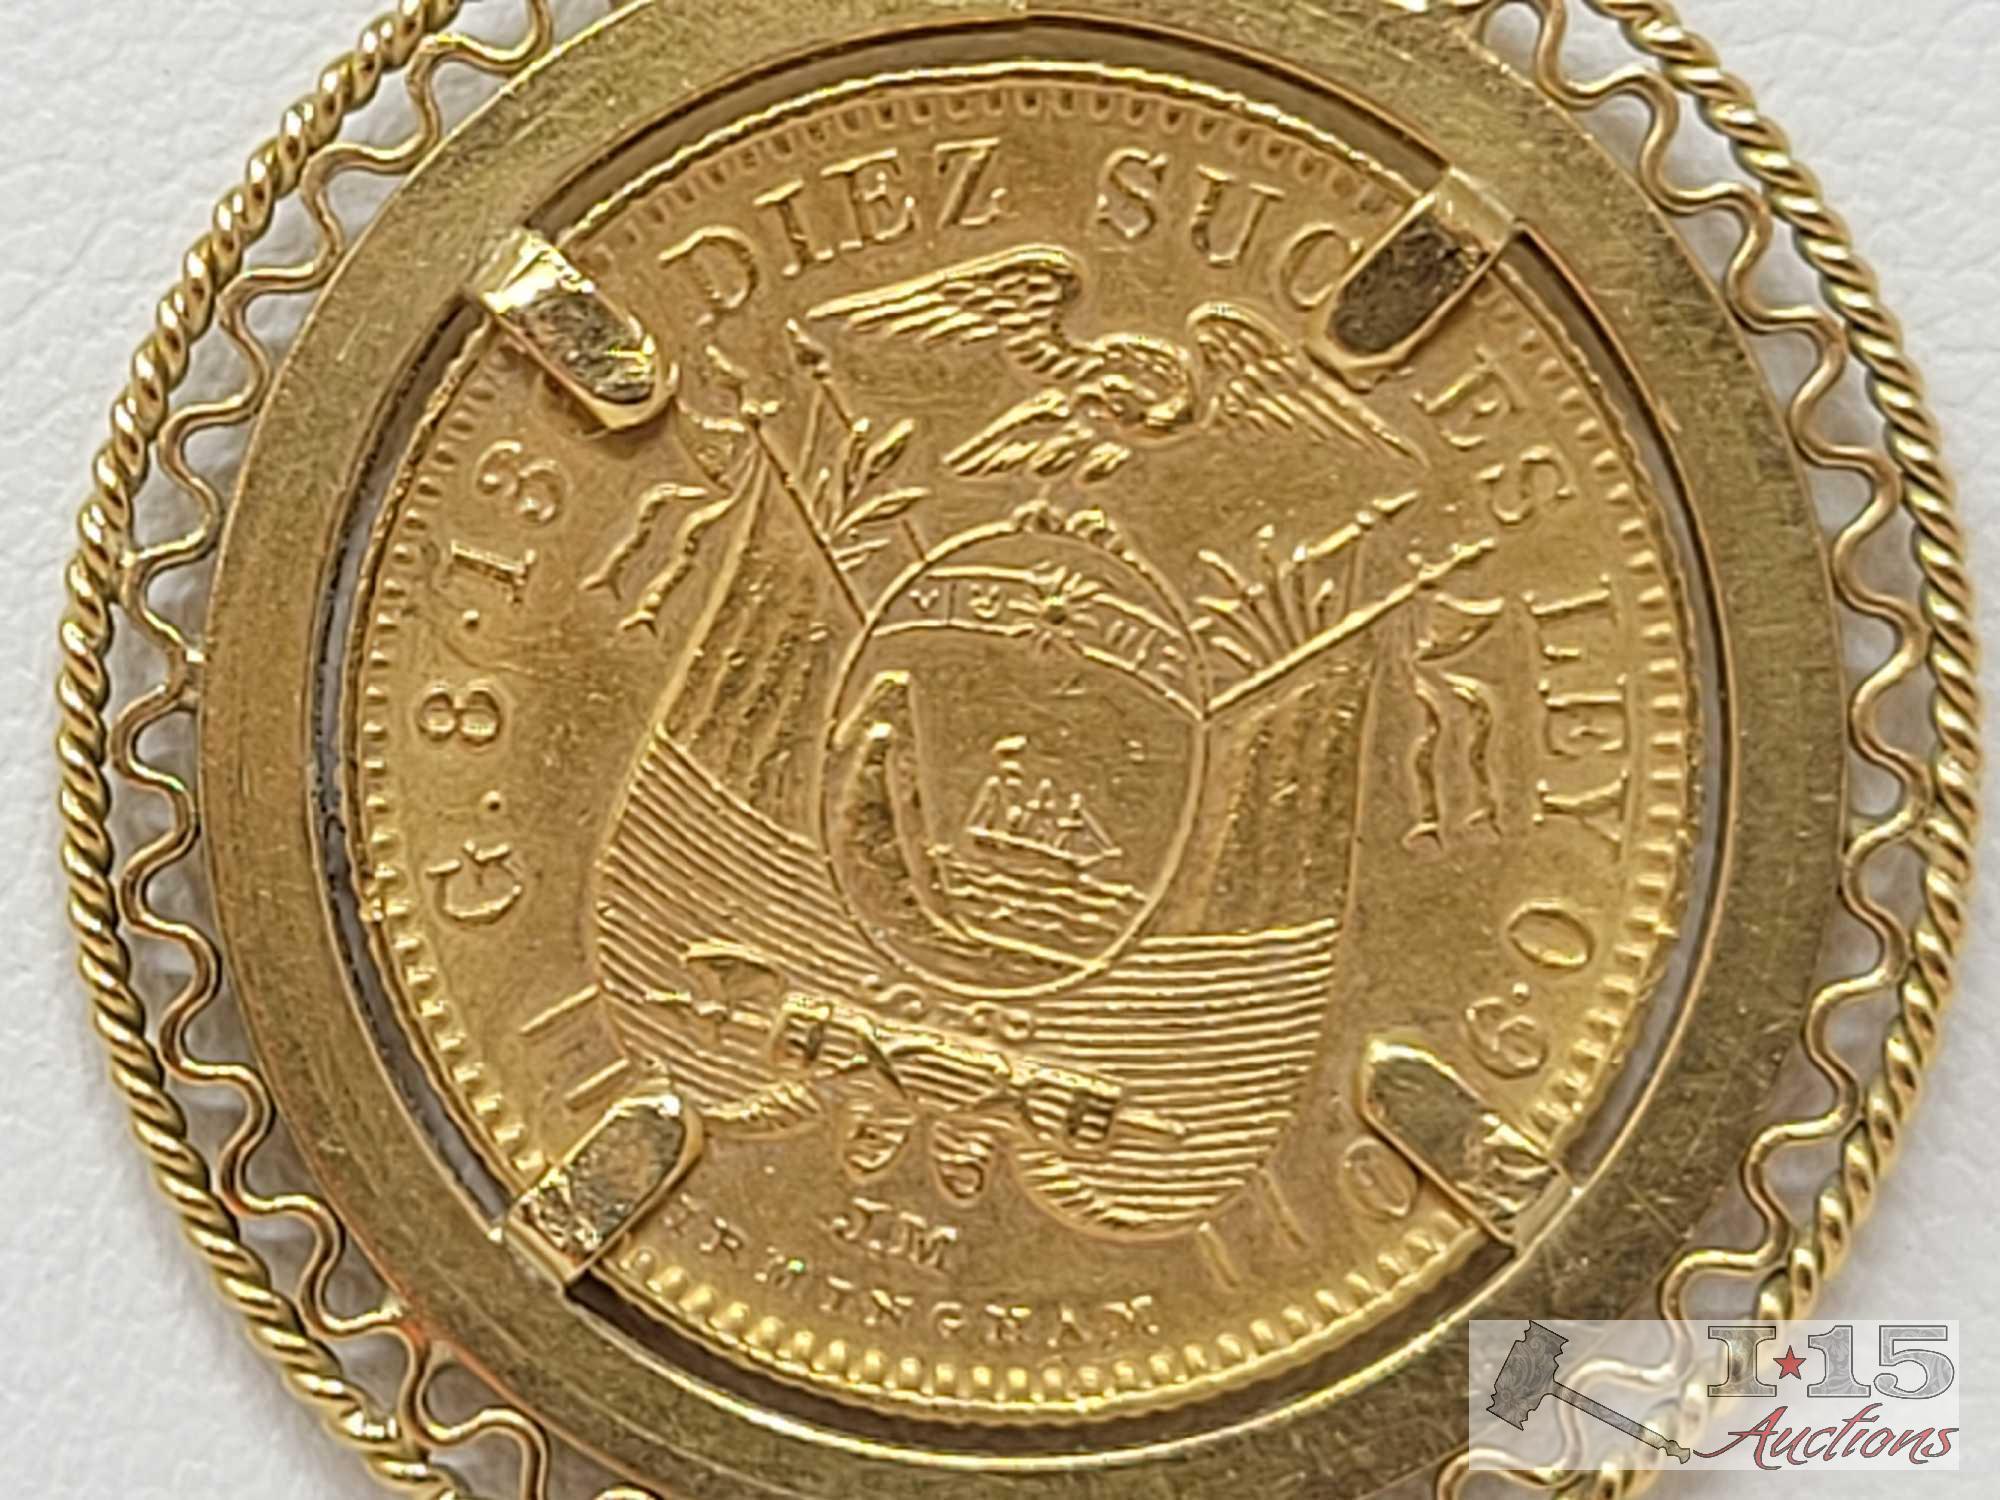 1899 Republica Del Ecuador 10 Sucres Gold Coin, 12.85g